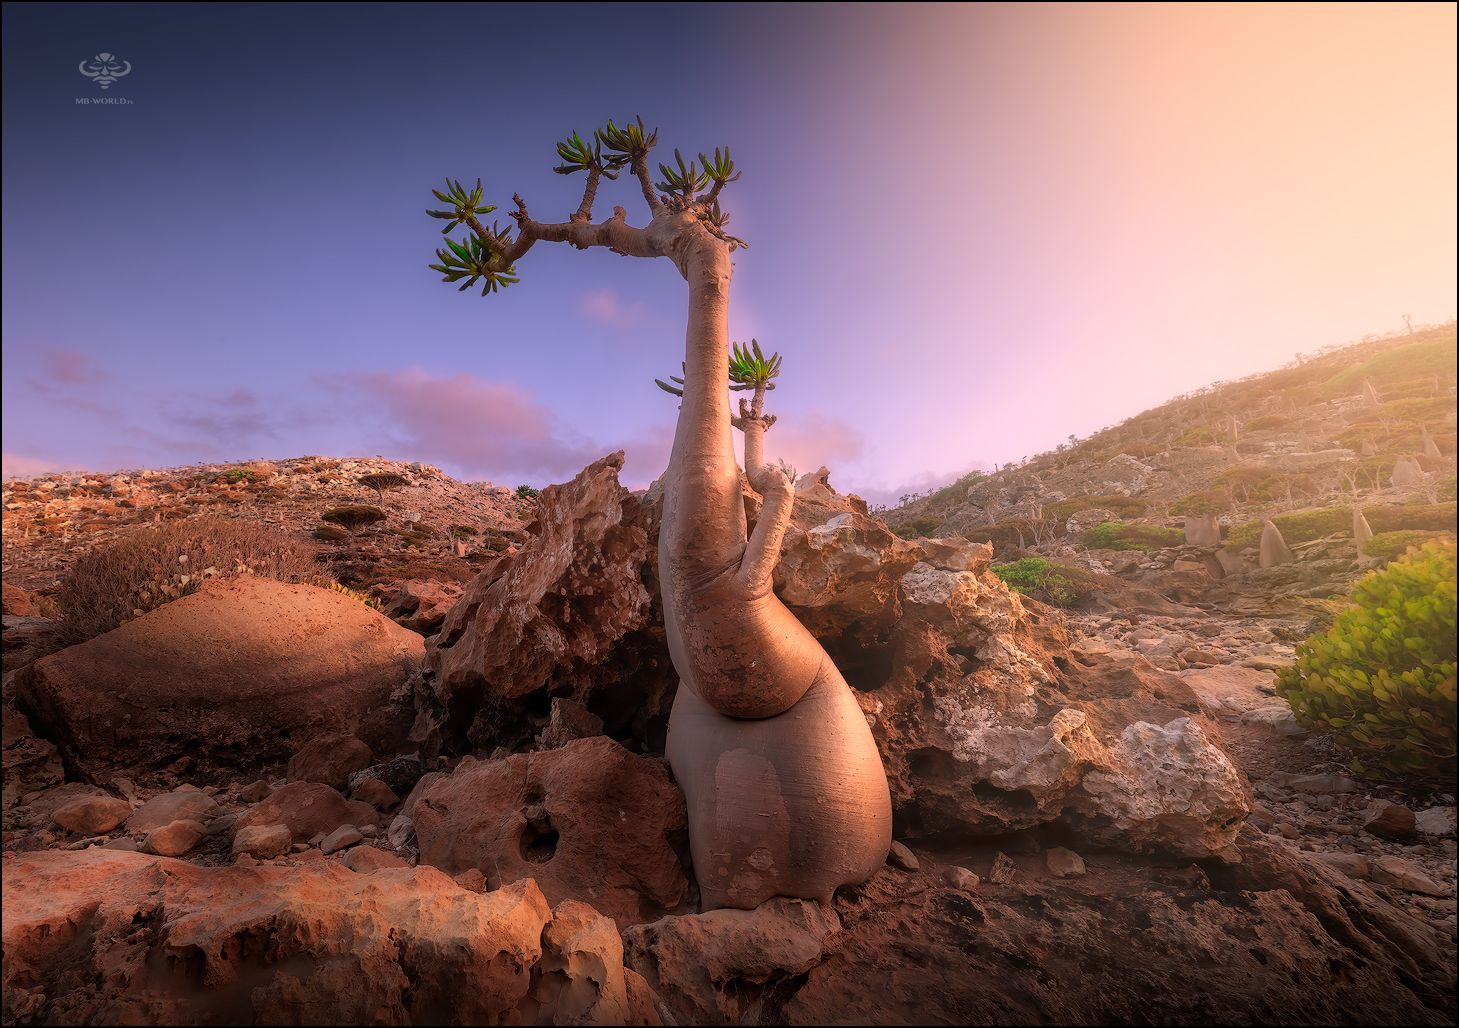 Йемен, сокотра, бутылочные деревья, Mikhail Vorobyev